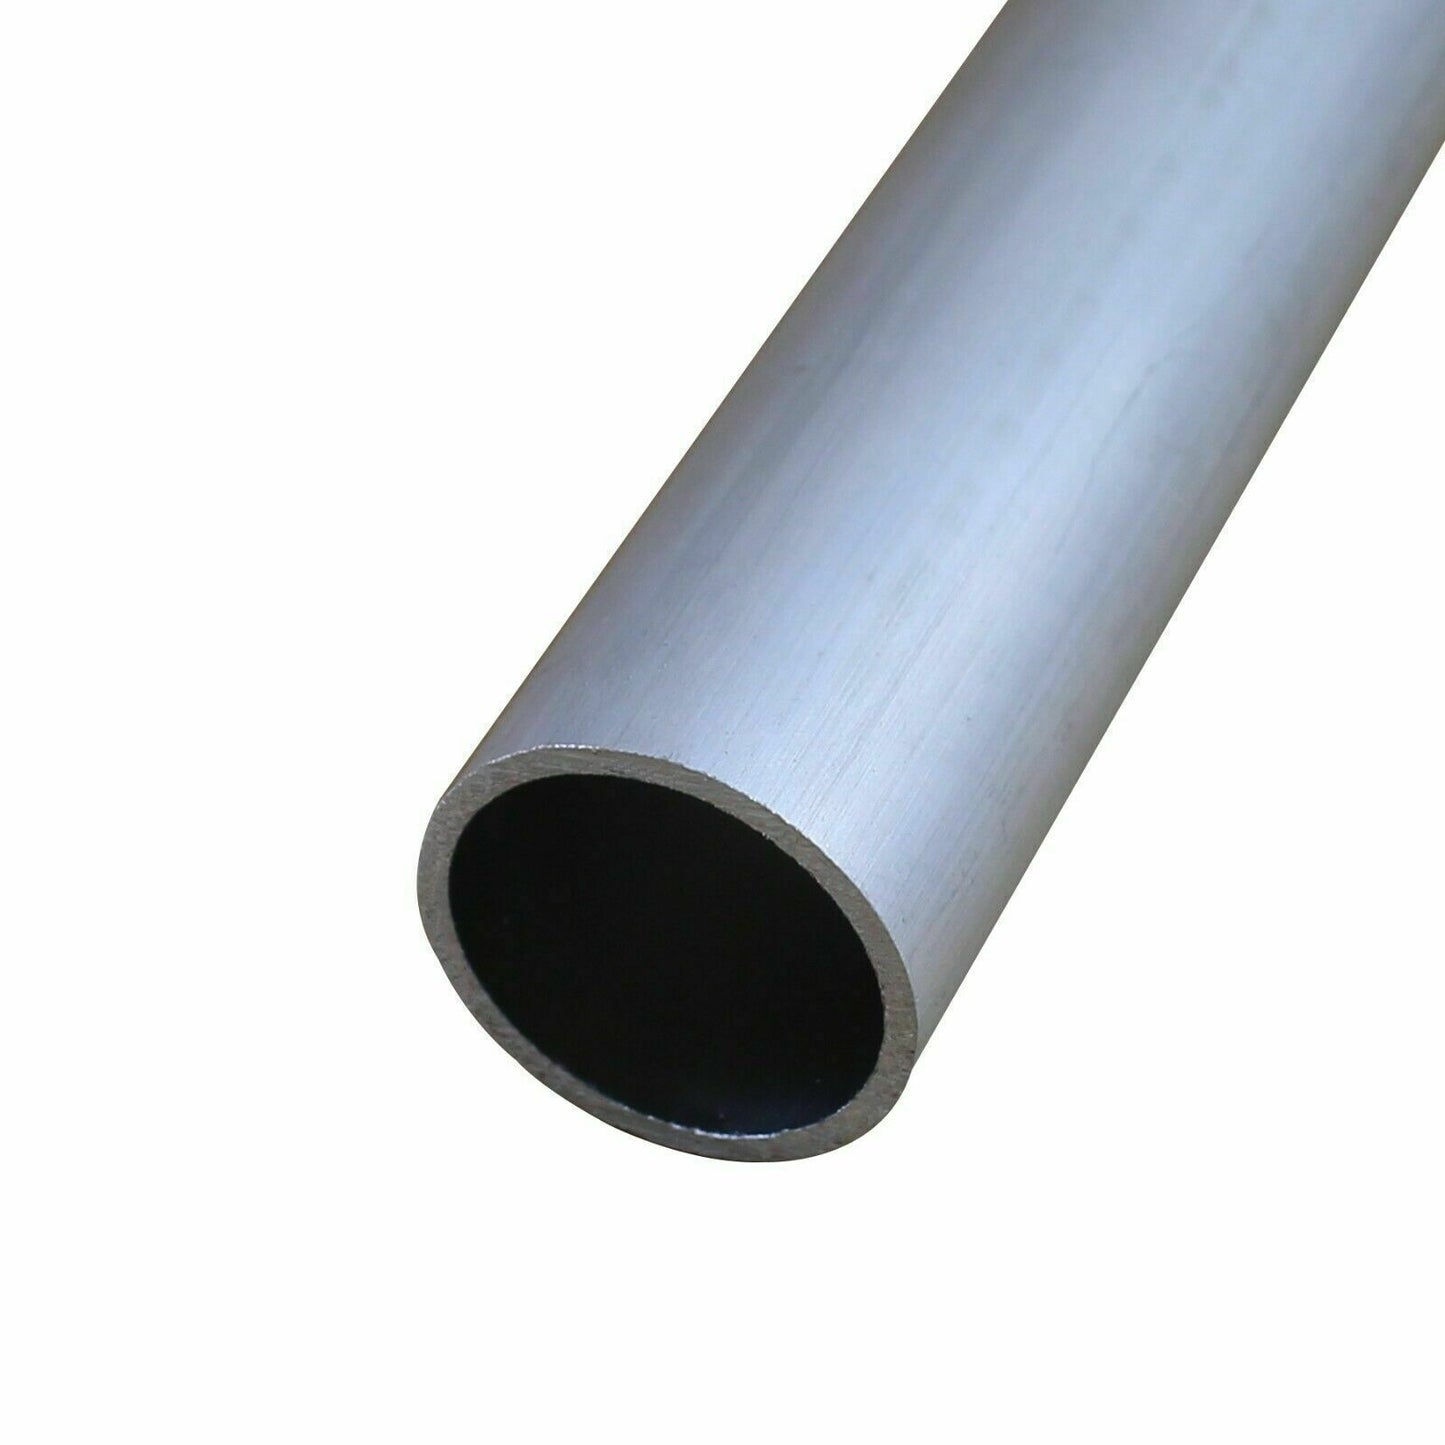 OD 30 mm ID 24 mm 1 Pcs Aluminum Round Tube Pipe